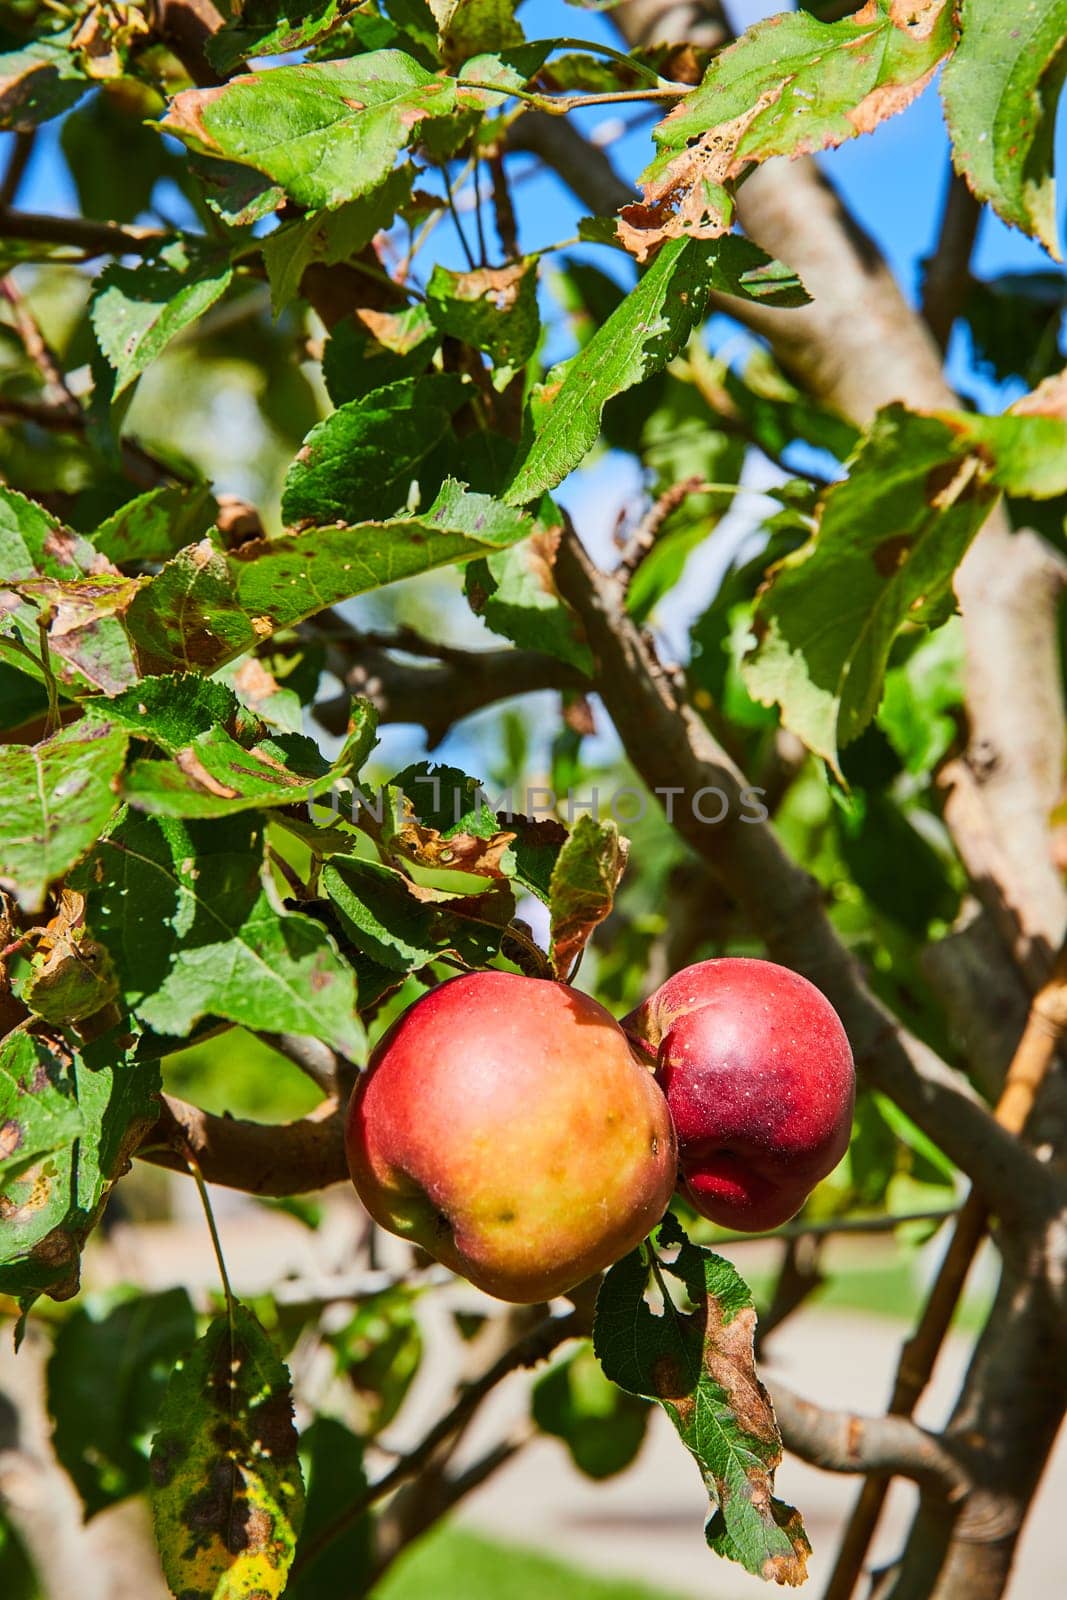 Ripe apples on tree in sunlit Elkhart botanic garden, Indiana, illustrating themes of organic farming and natural abundance